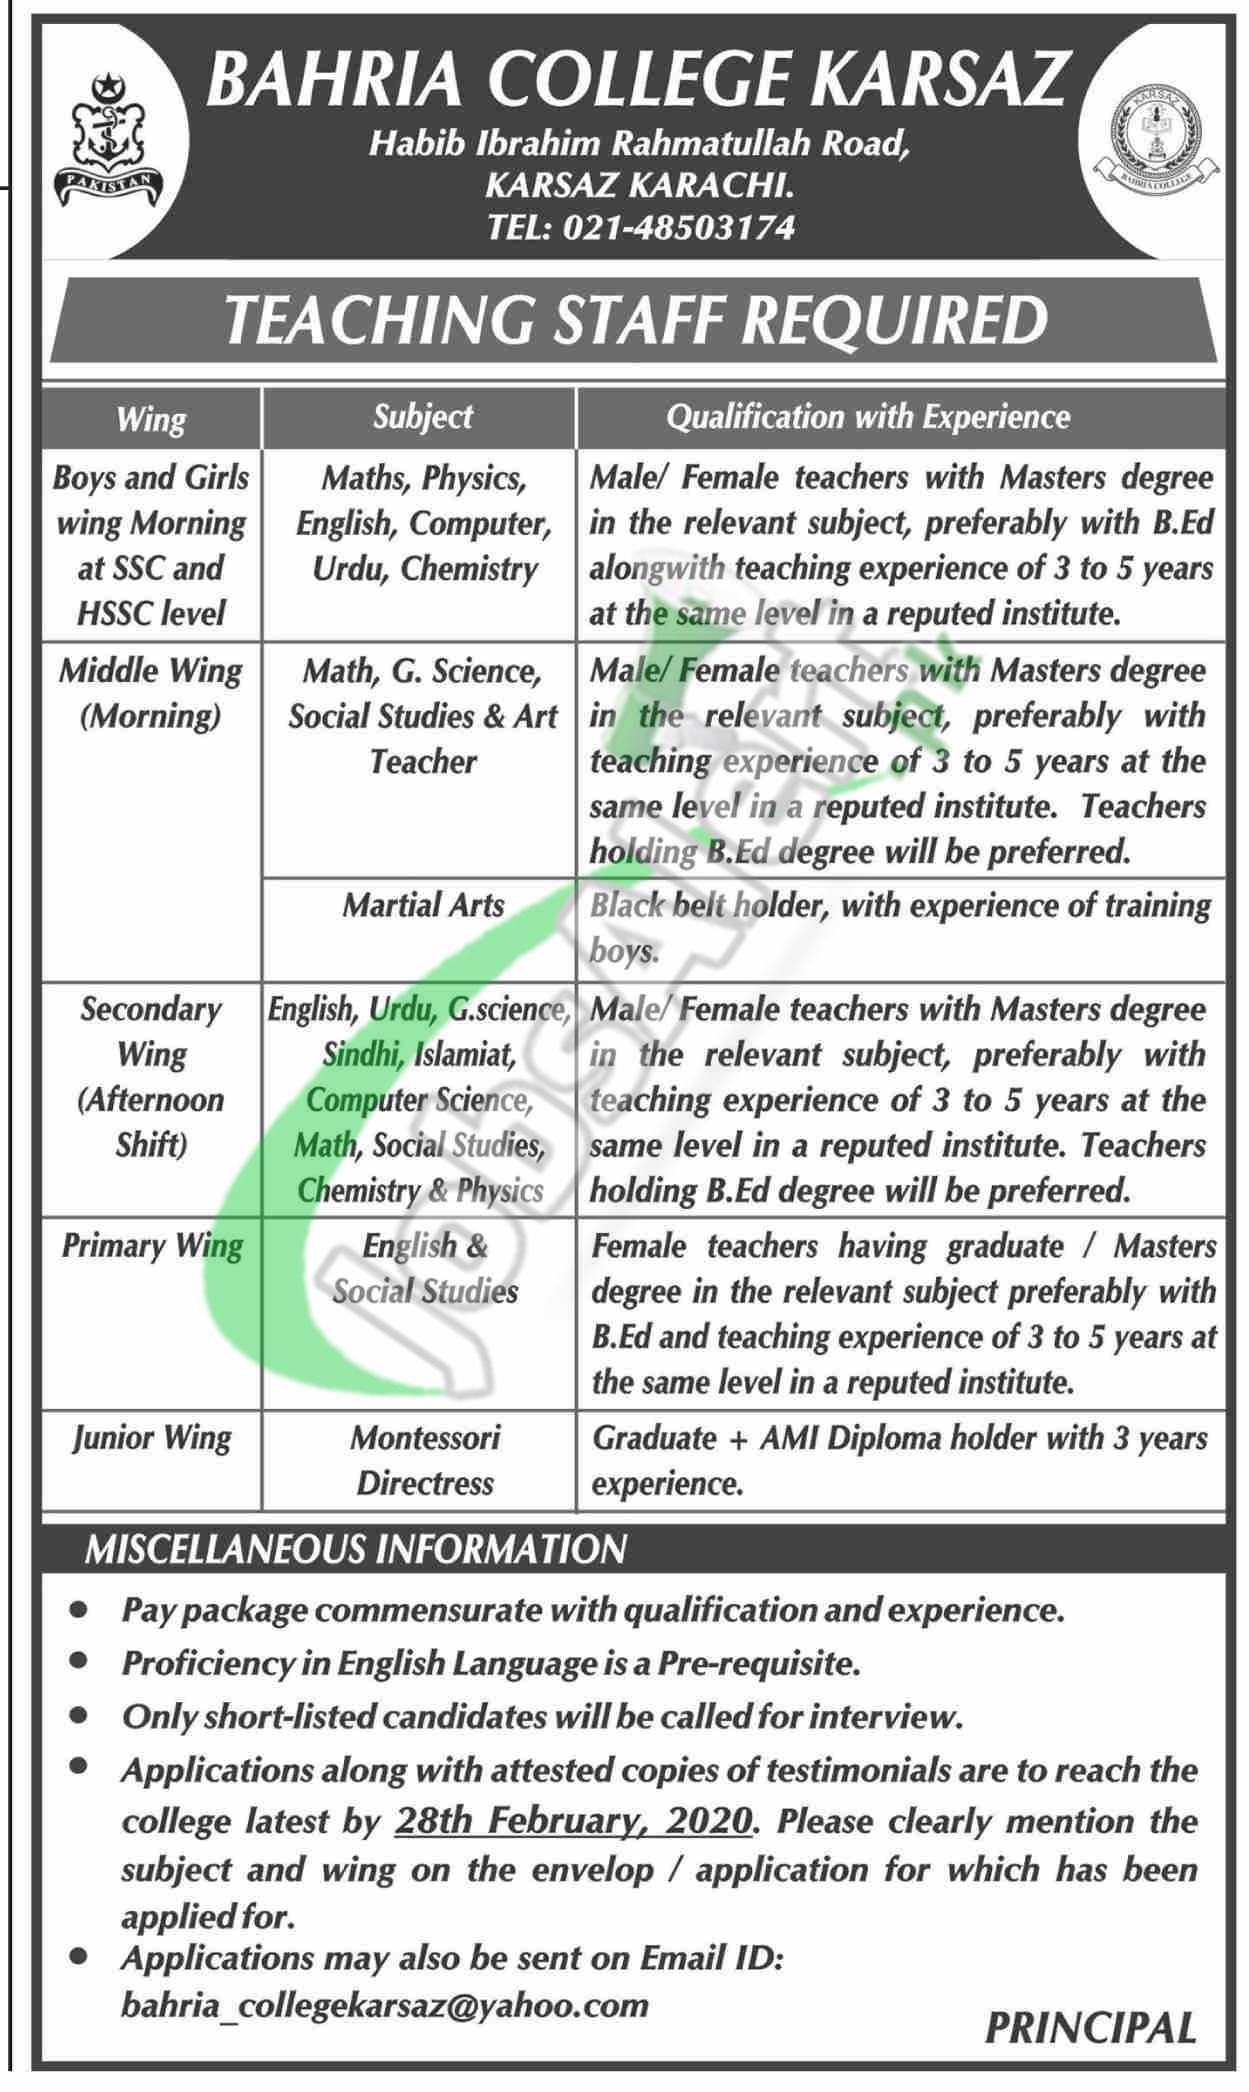 bahria-college-karsaz-jobs-2020-teaching-staff-application-form-download-jobs-in-pakistan